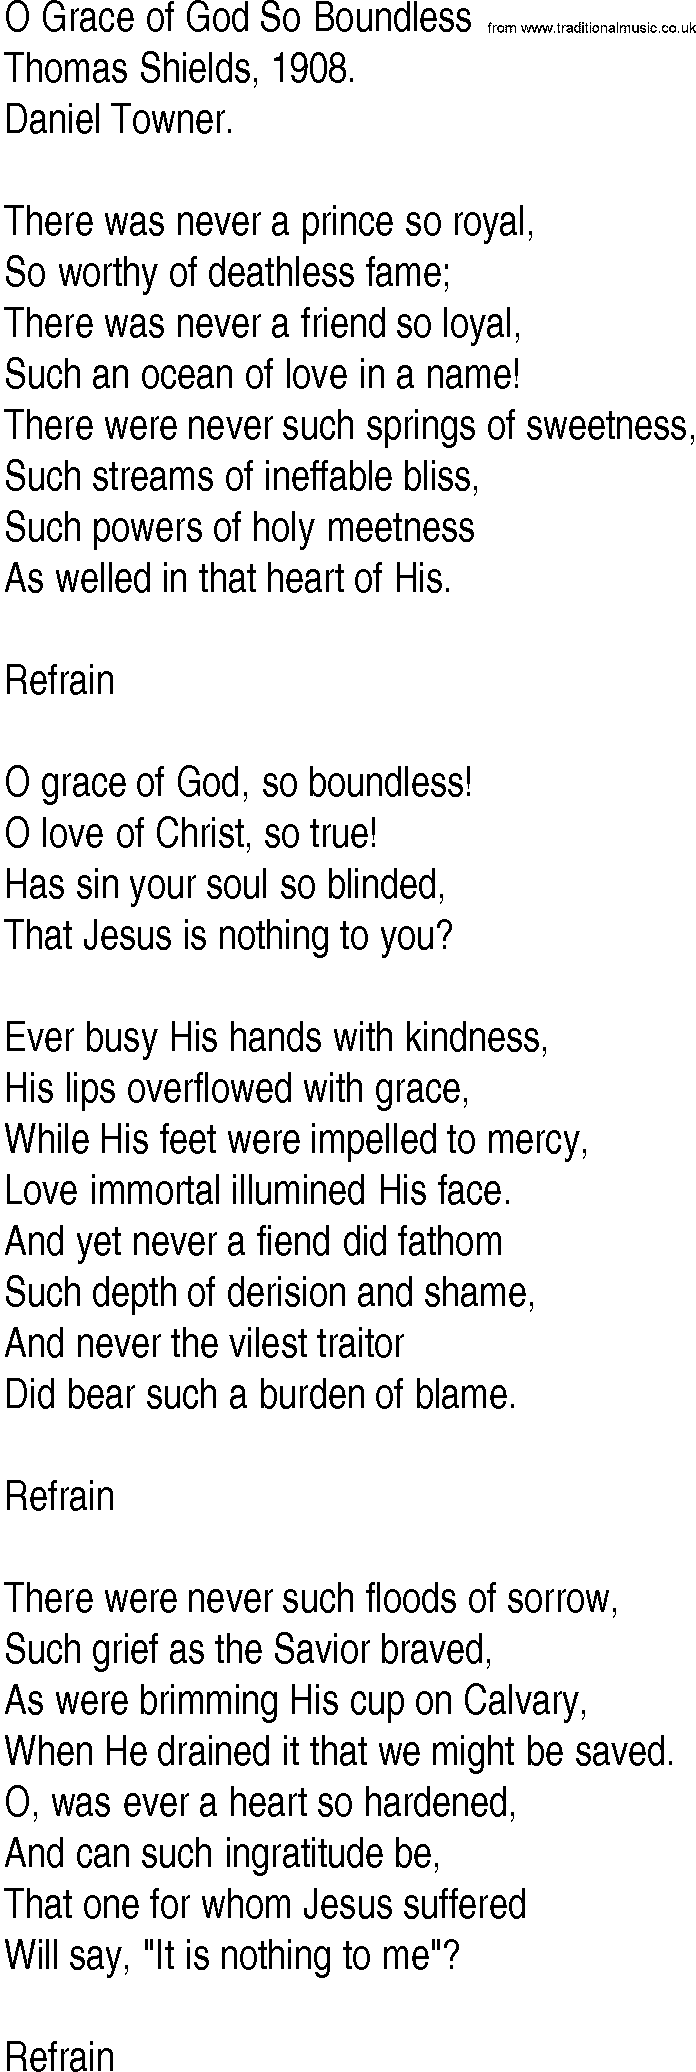 Hymn and Gospel Song: O Grace of God So Boundless by Thomas Shields lyrics